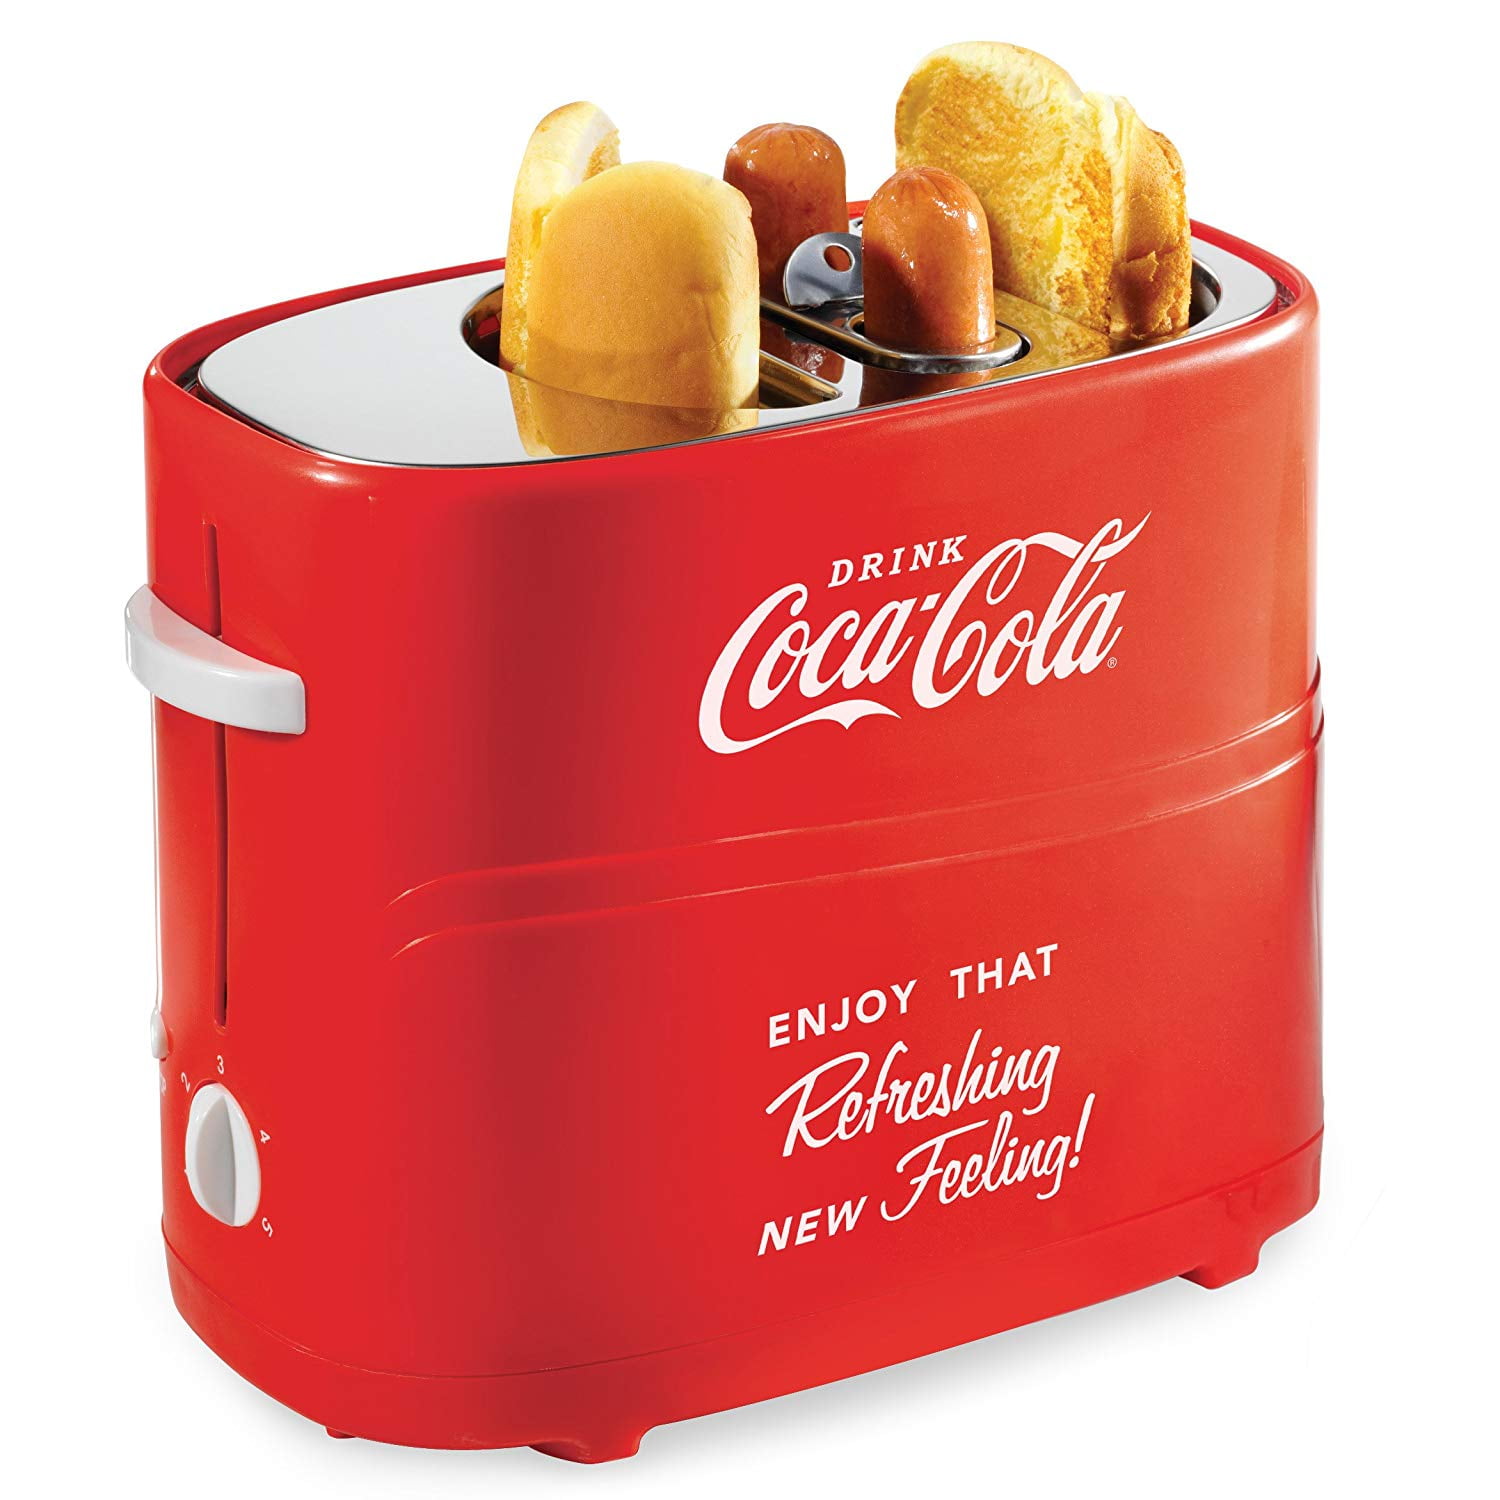 With Mini To... Nostalgia HDT600COKE Coca-Cola Pop-Up 2 Hot Dog and Bun Toaster